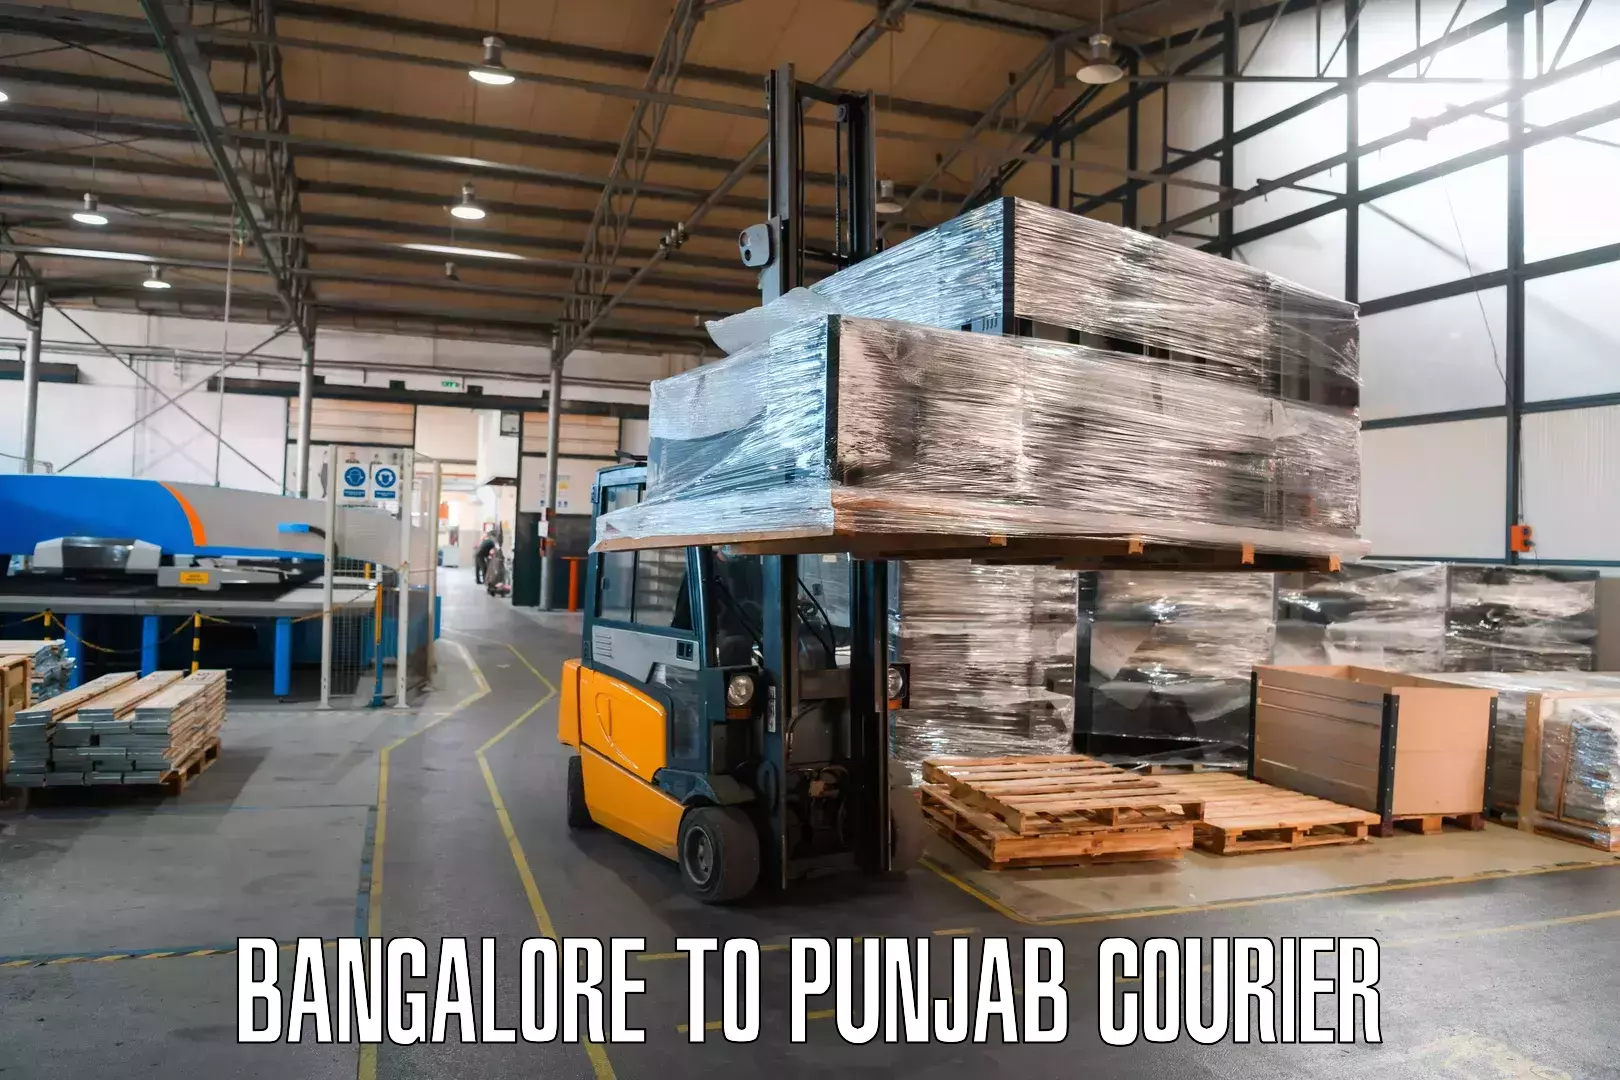 Quick dispatch service in Bangalore to Punjab